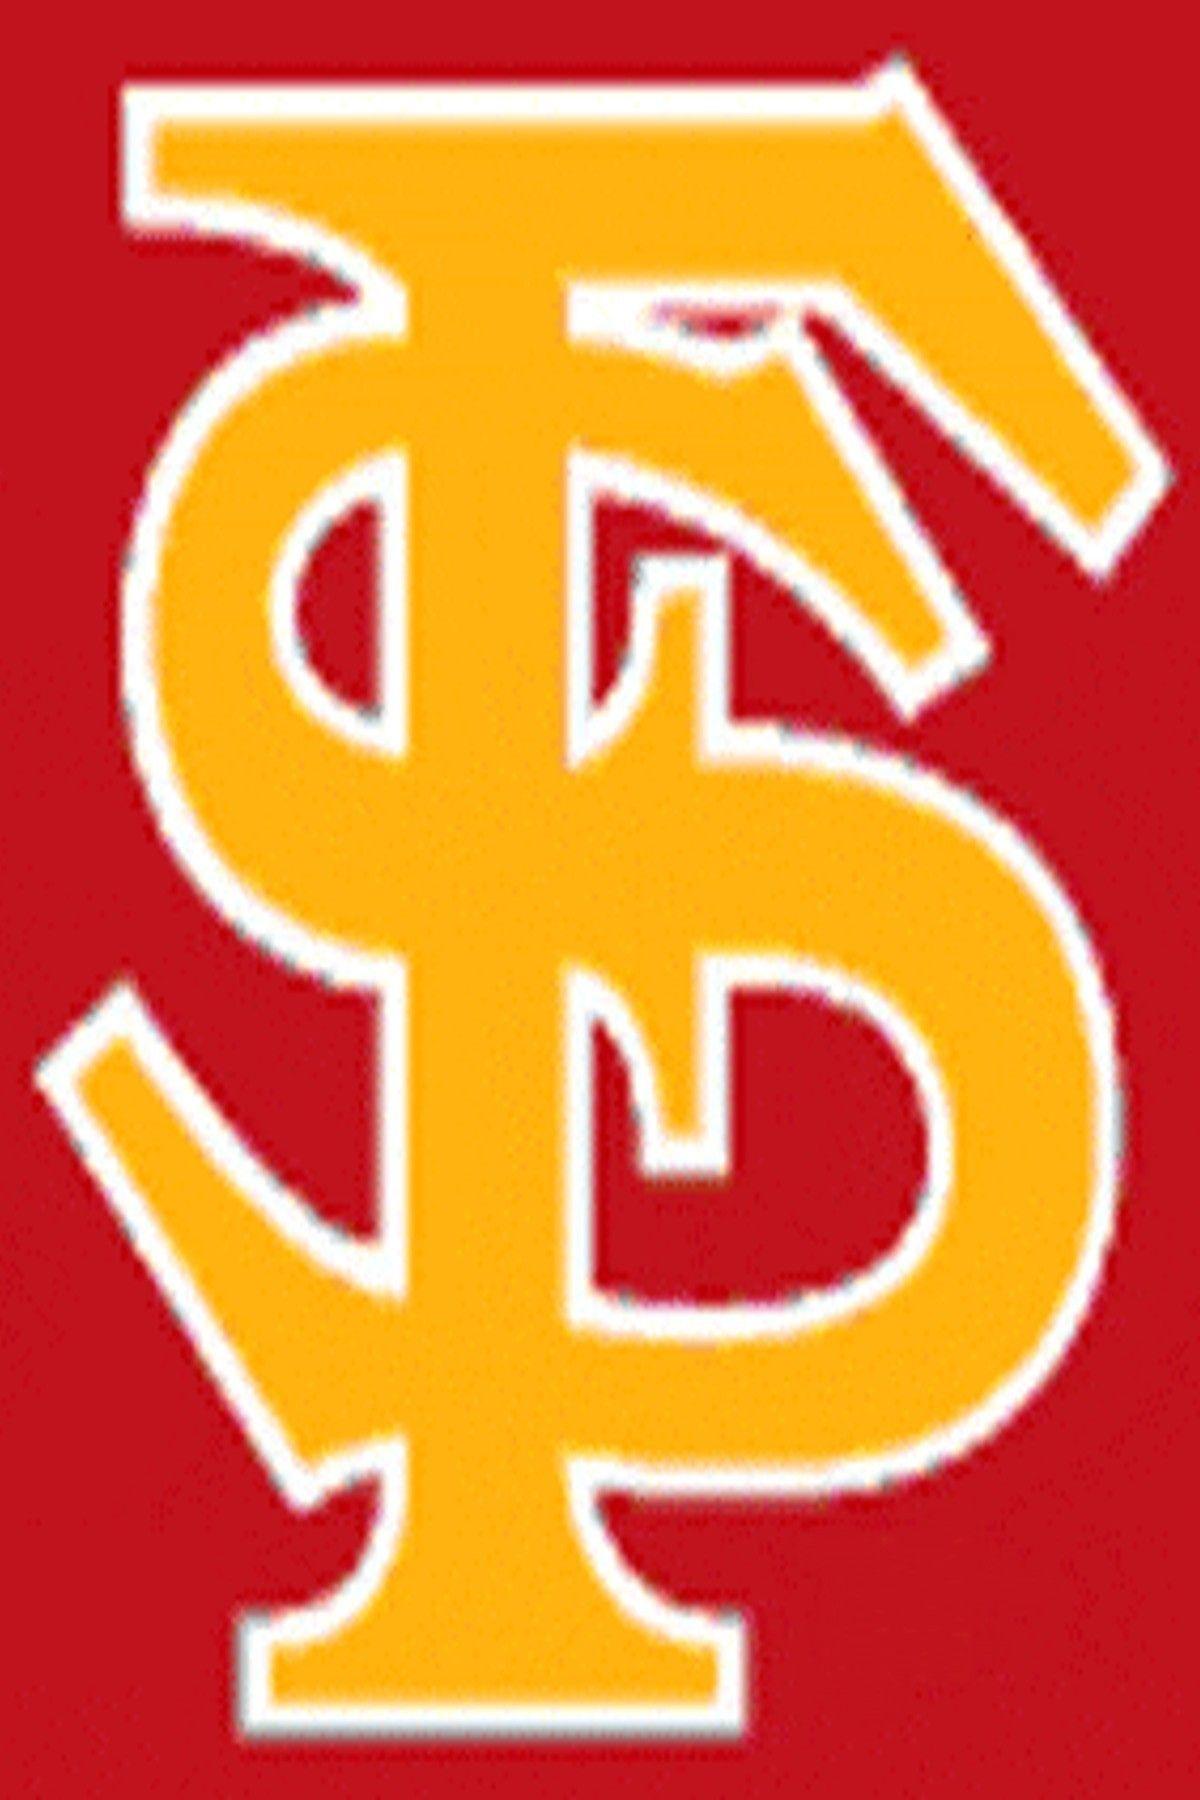 Florida State Football Logo - Florida State Football image Logo HD wallpaper and background